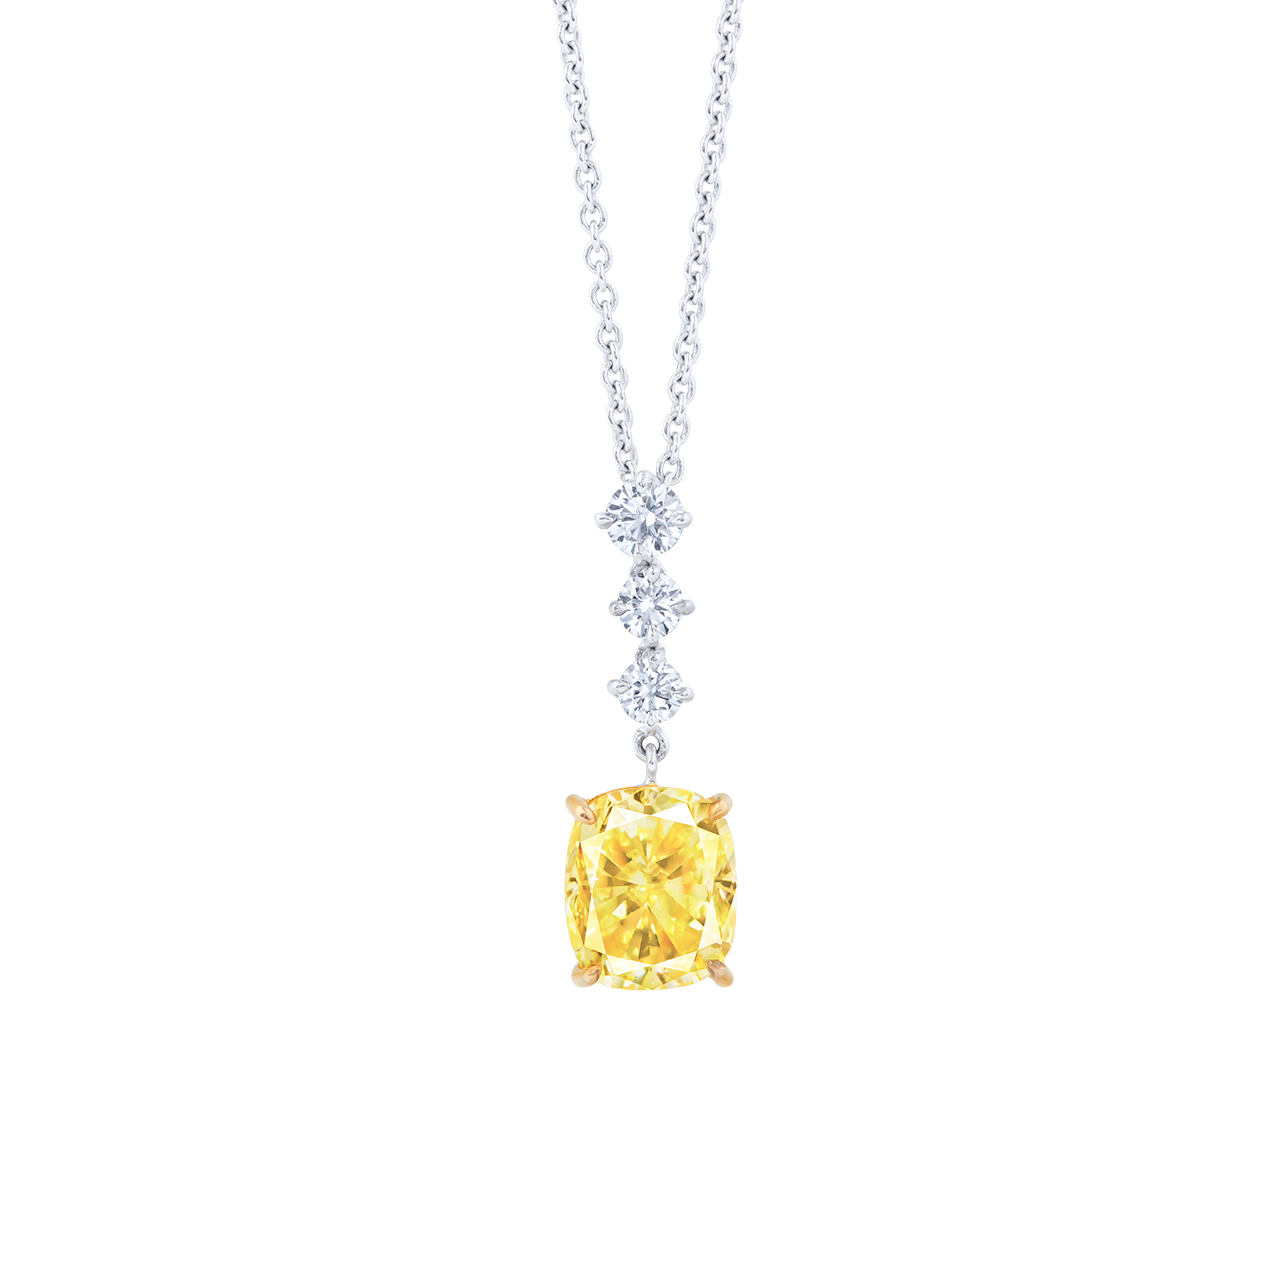 GIA 2.02克拉 黃鑽墜鍊
Fancy Yellow Colored Diamond 
Pendant Necklace